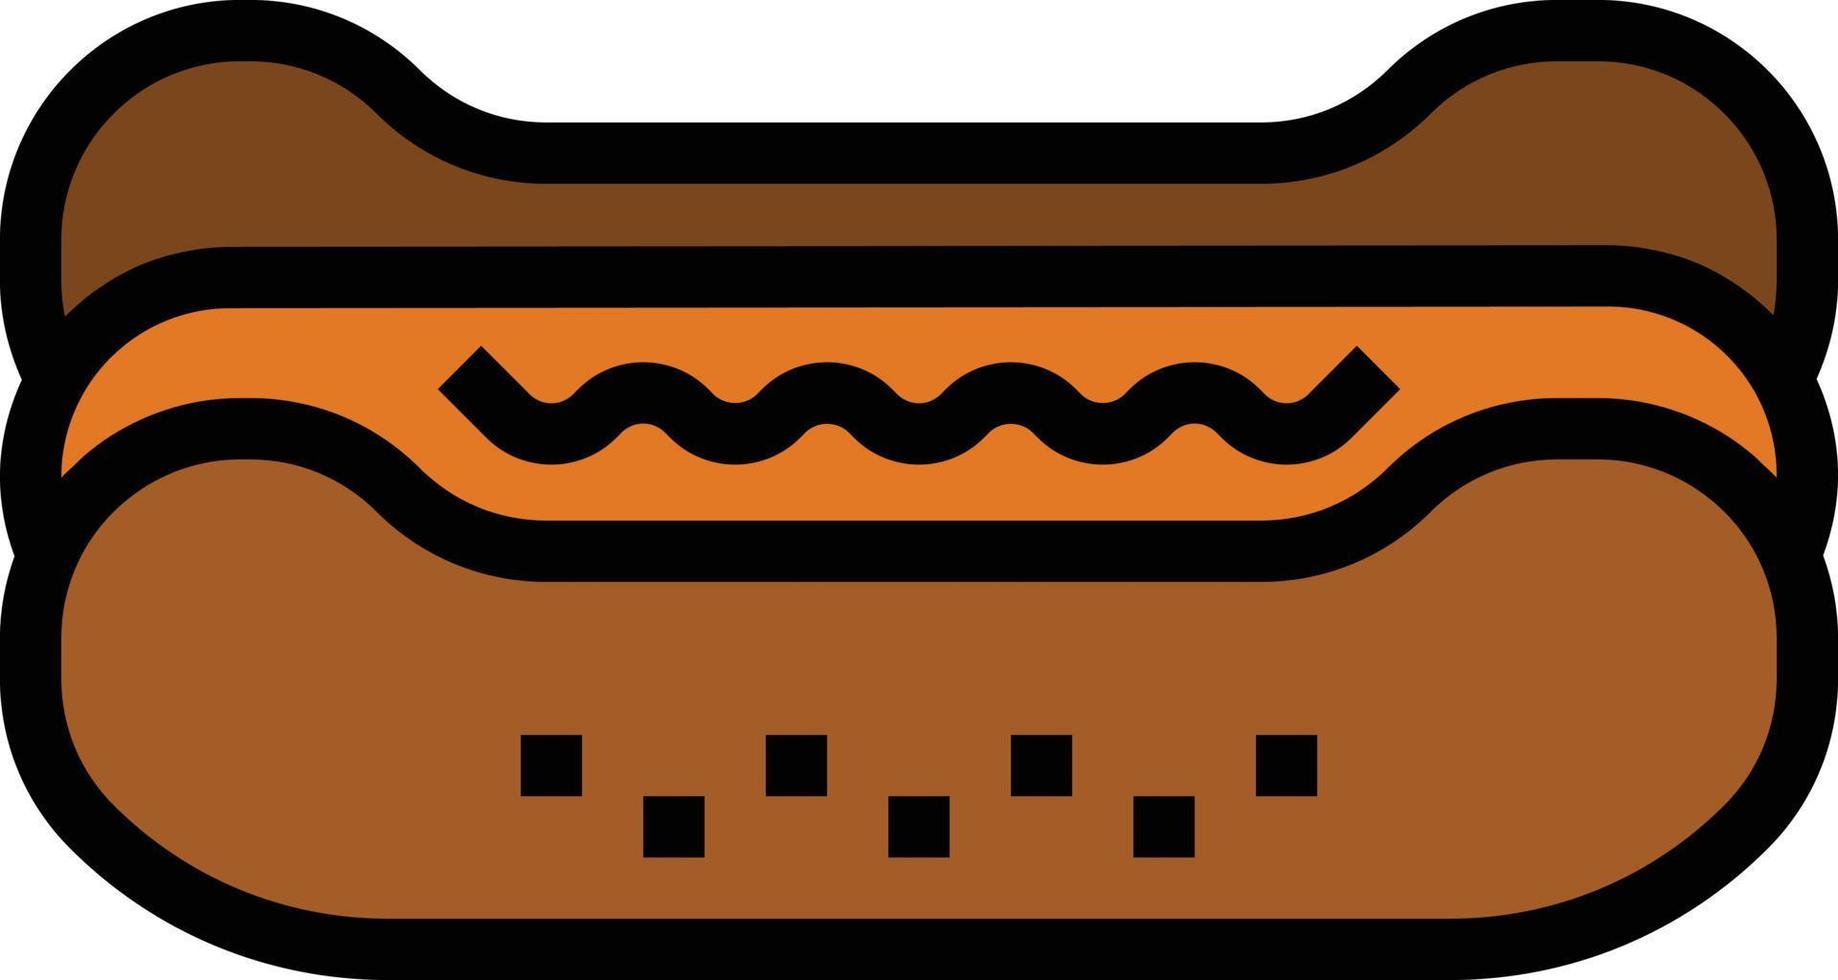 fastfood de comida de cachorro-quente - ícone de contorno preenchido vetor